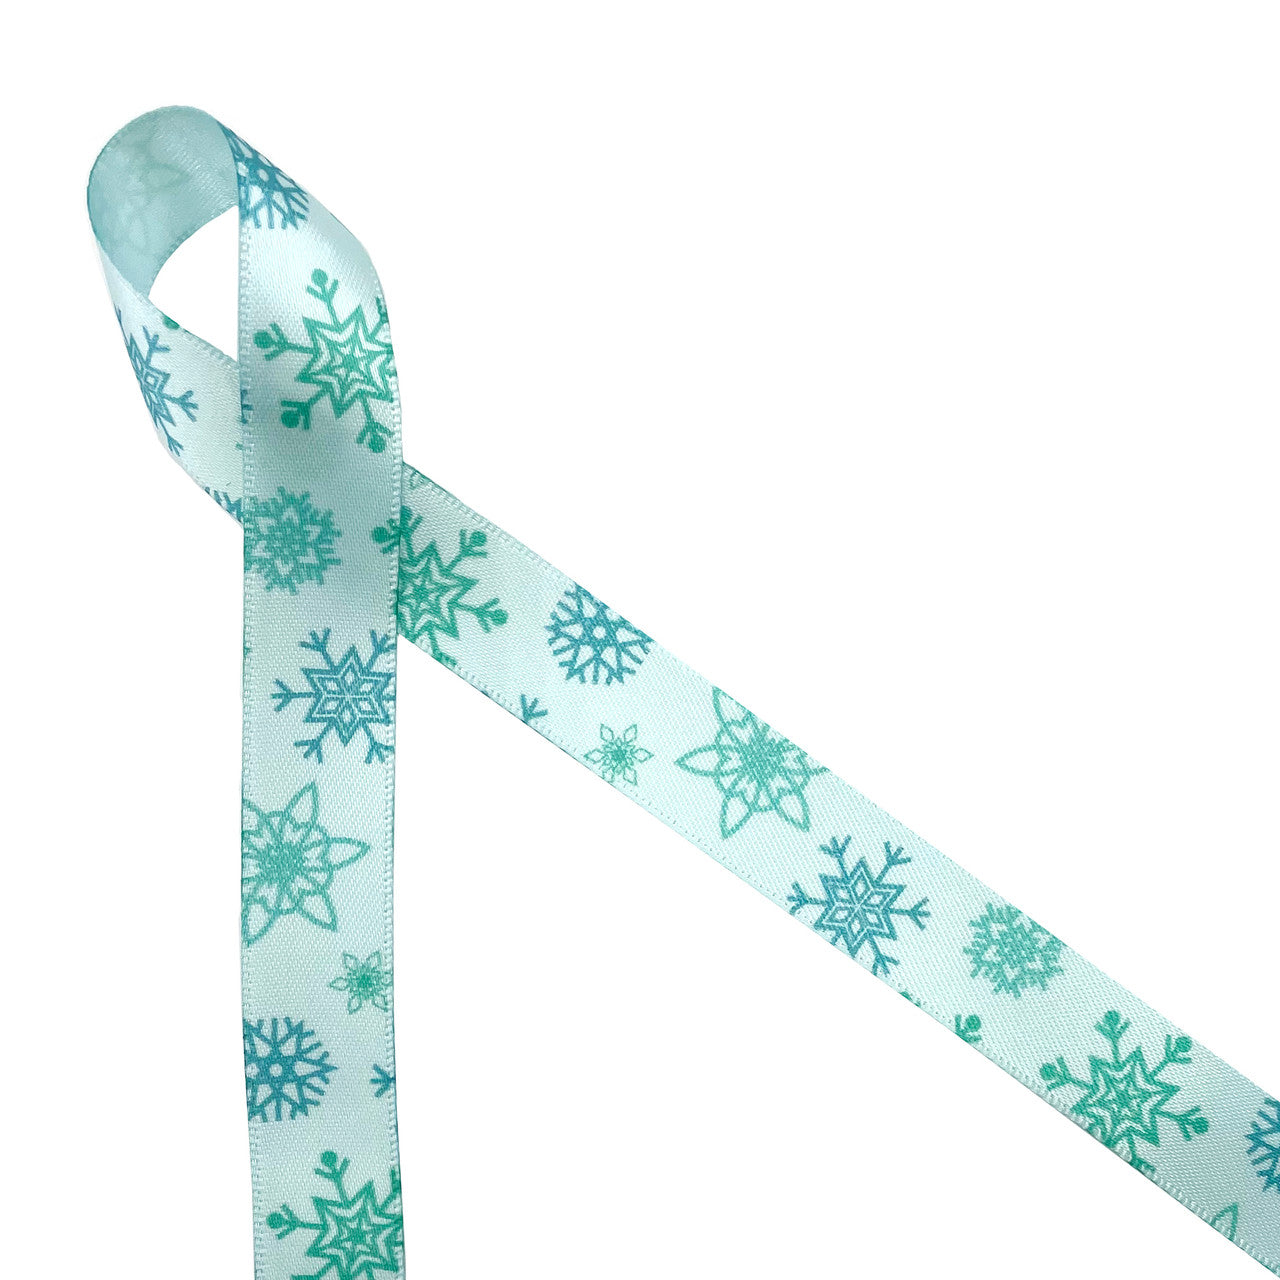 Snowflakes in medium blue on ice blue 5/8 single face satin ribbon